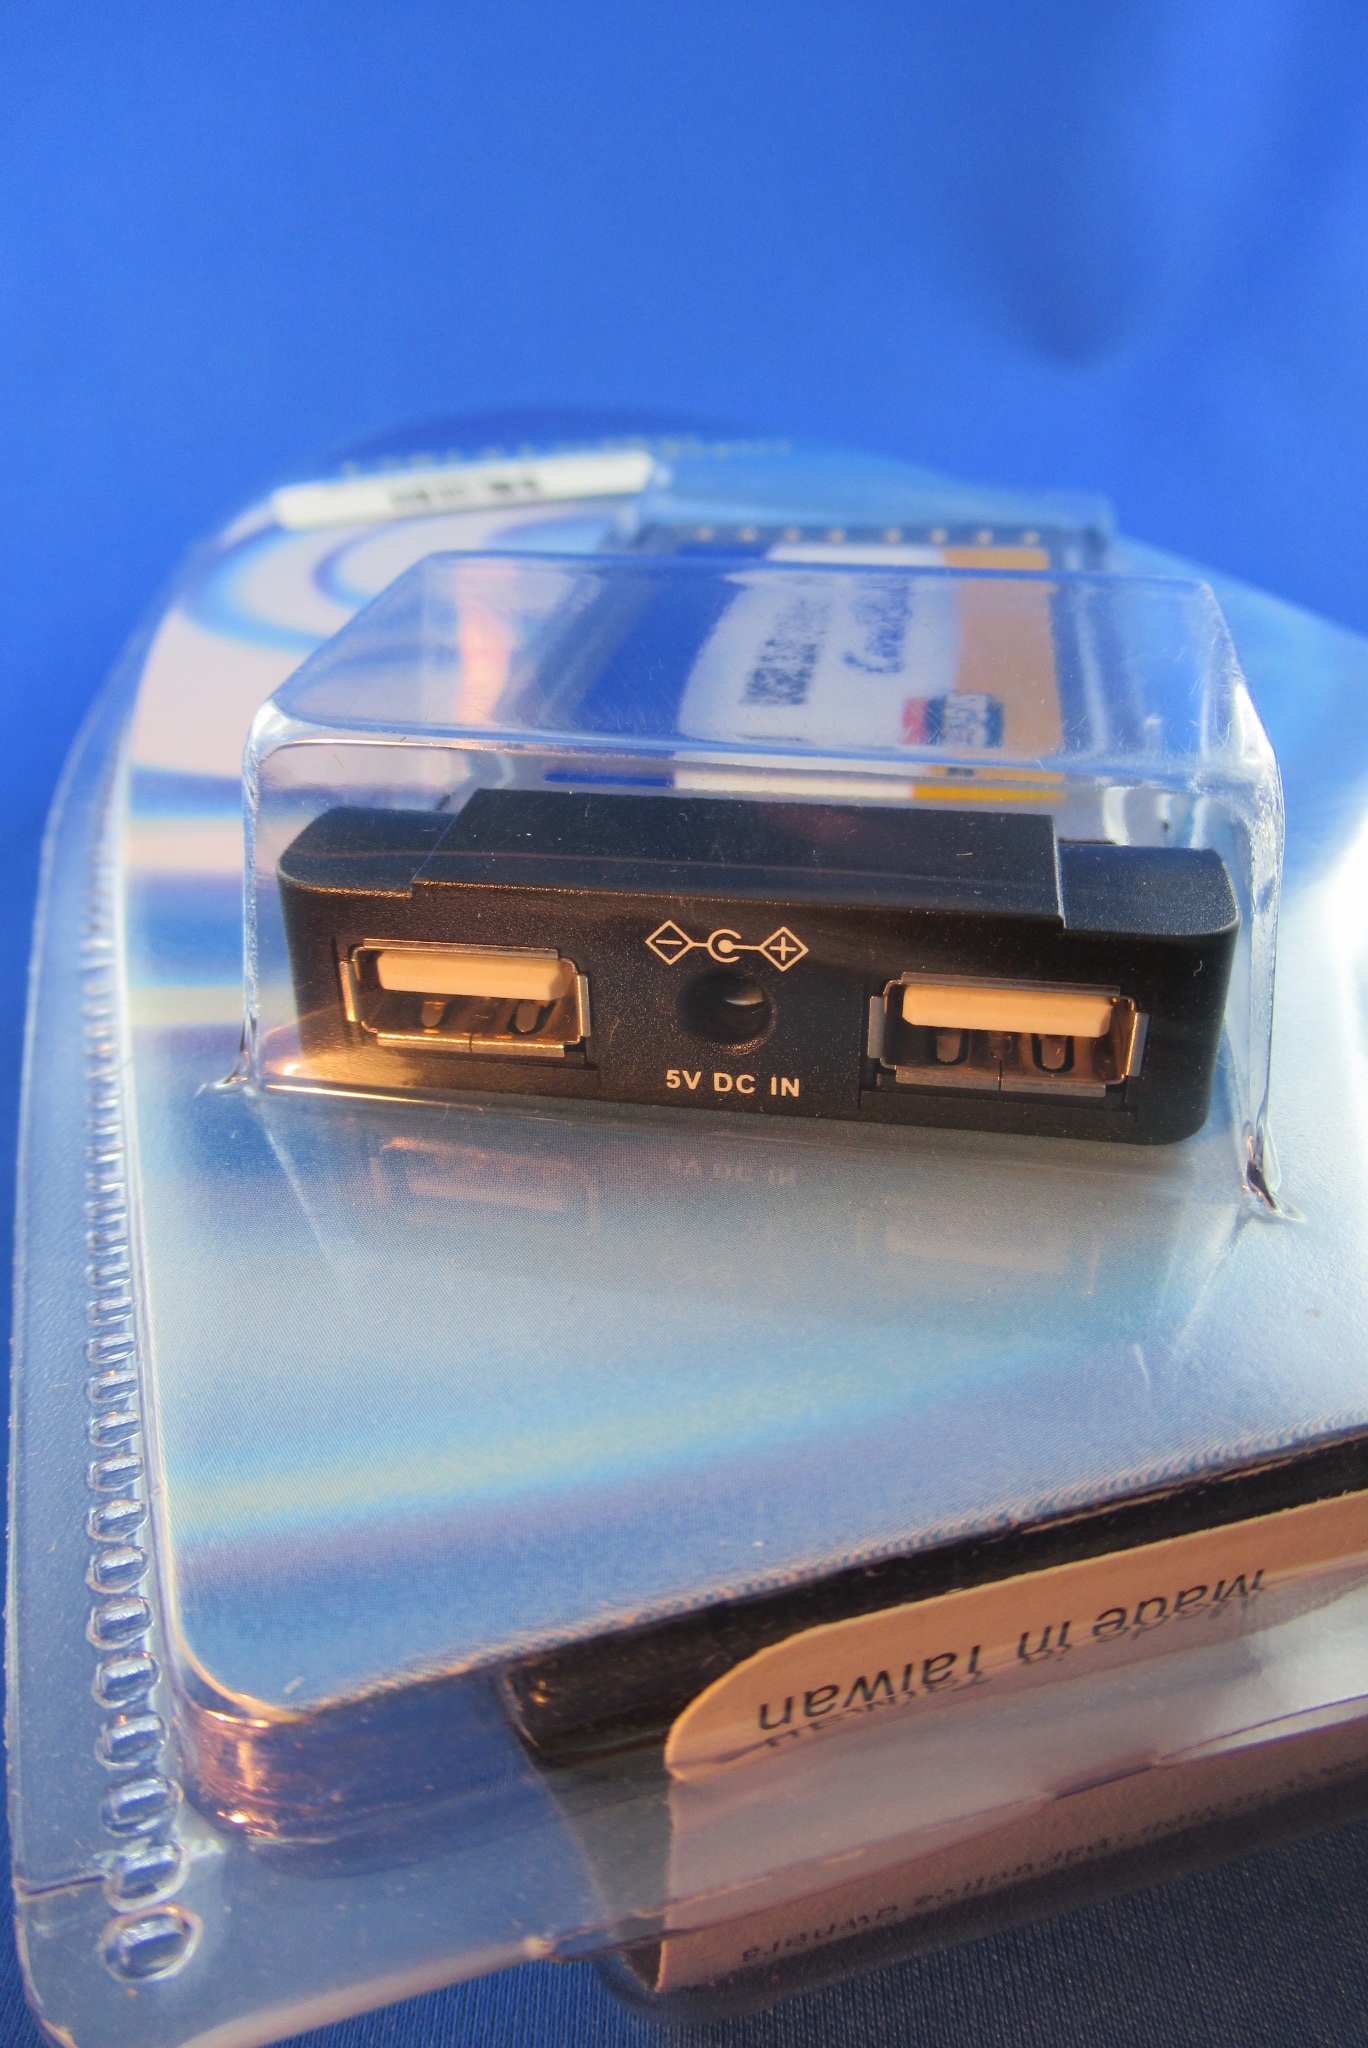 USB-Erweiterungskarte 2x USB 2.0 CardBus SECOMP 15.99.2165